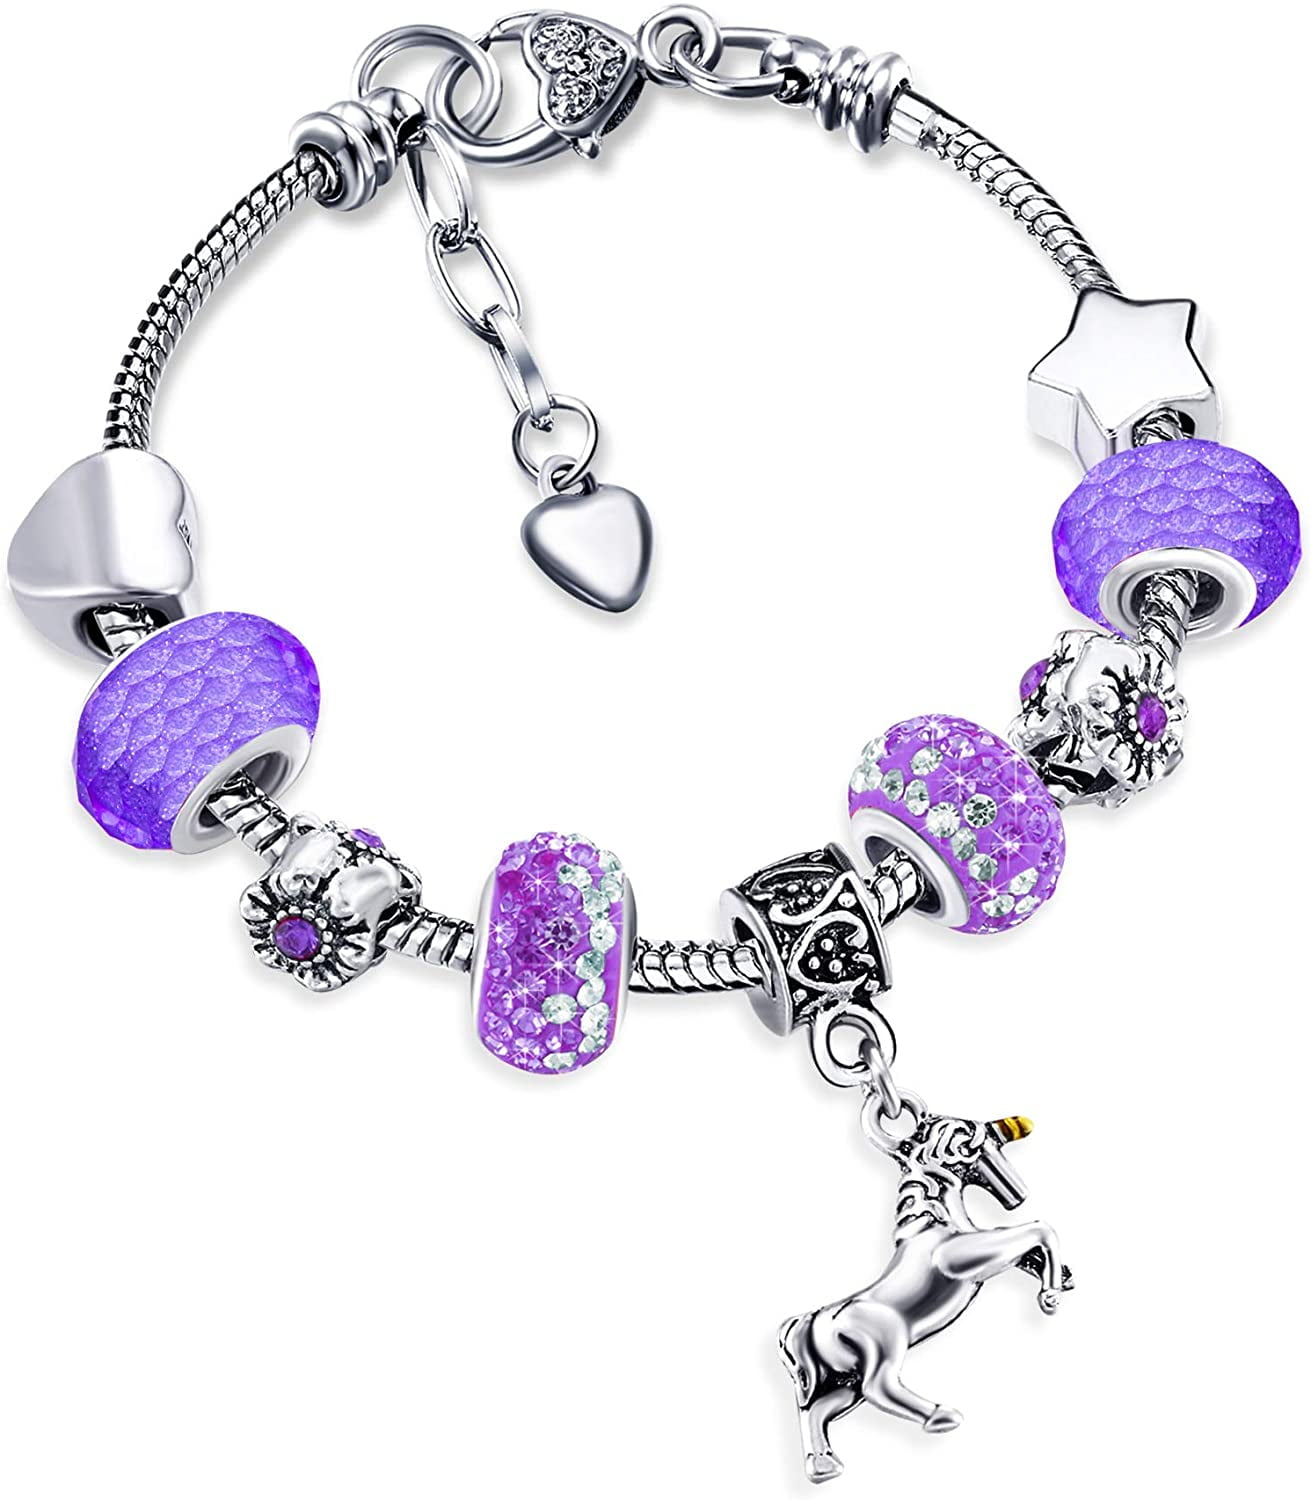 Amazon.com: Pandora Jewelry Bangle Sterling Silver Bracelet, 7.5